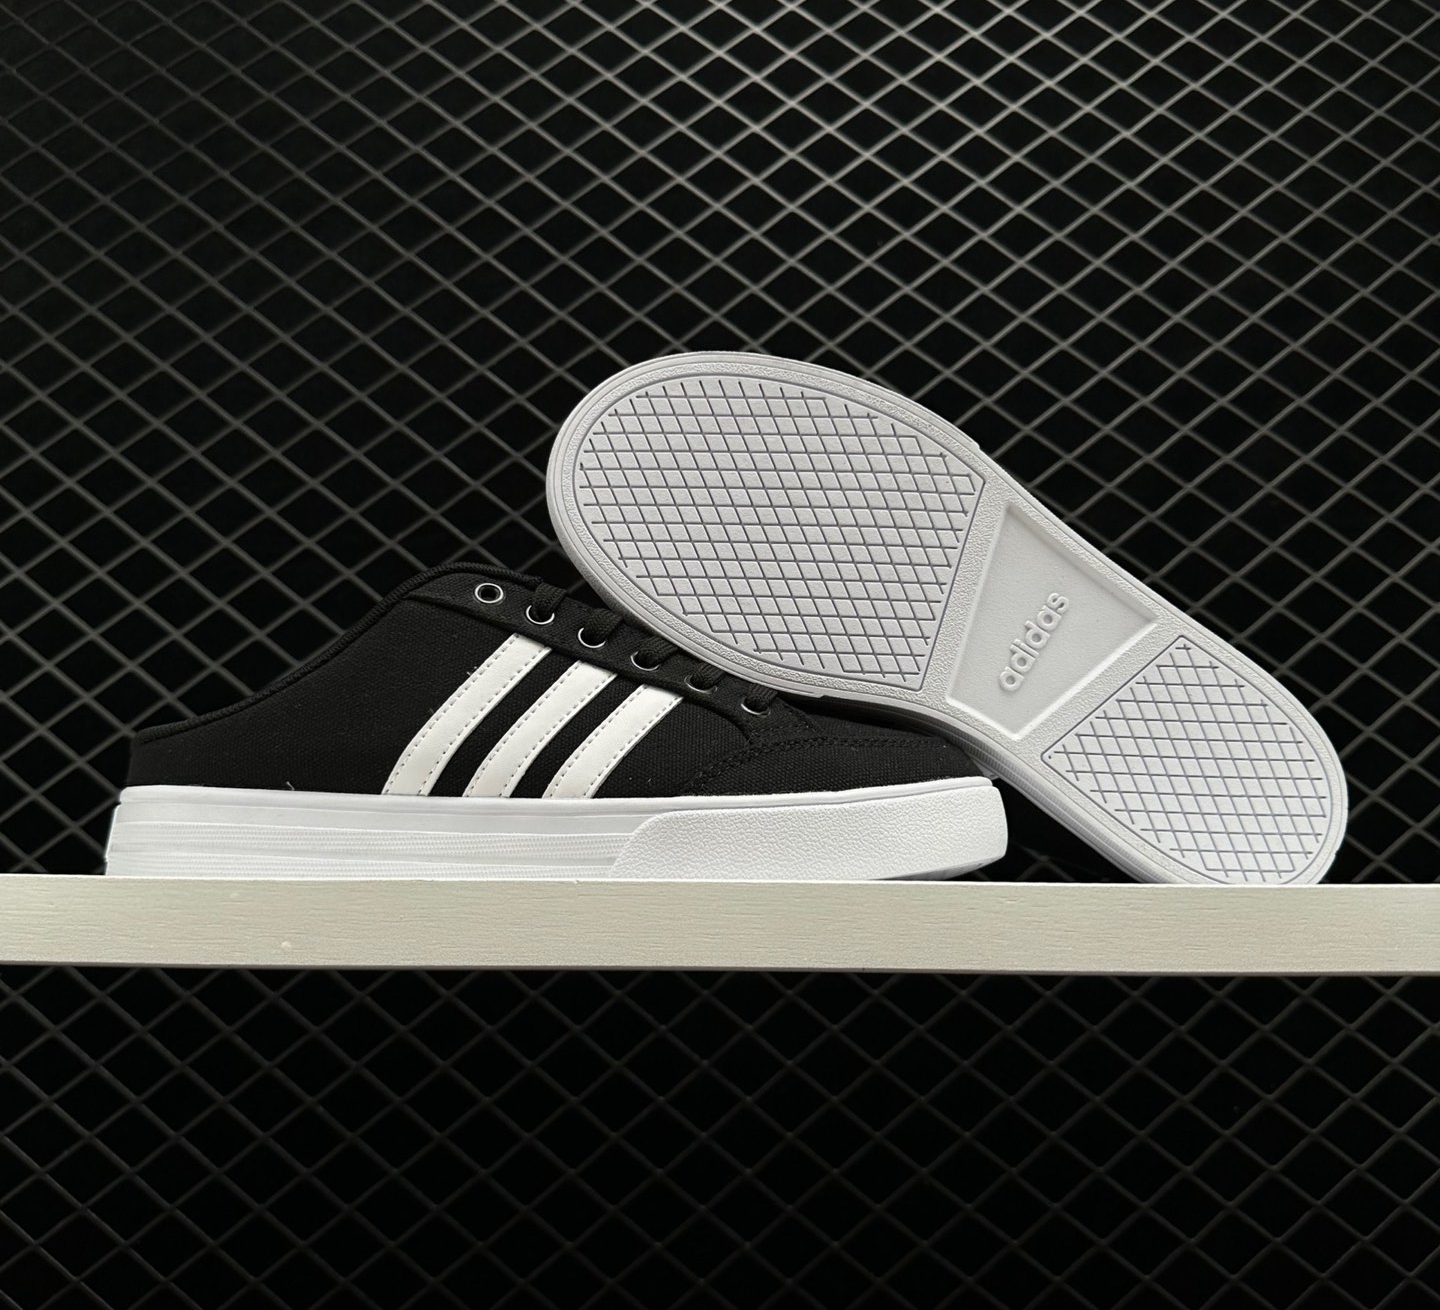 Adidas VS Set Mule Black White - FX4850: Stylish and Versatile Footwear